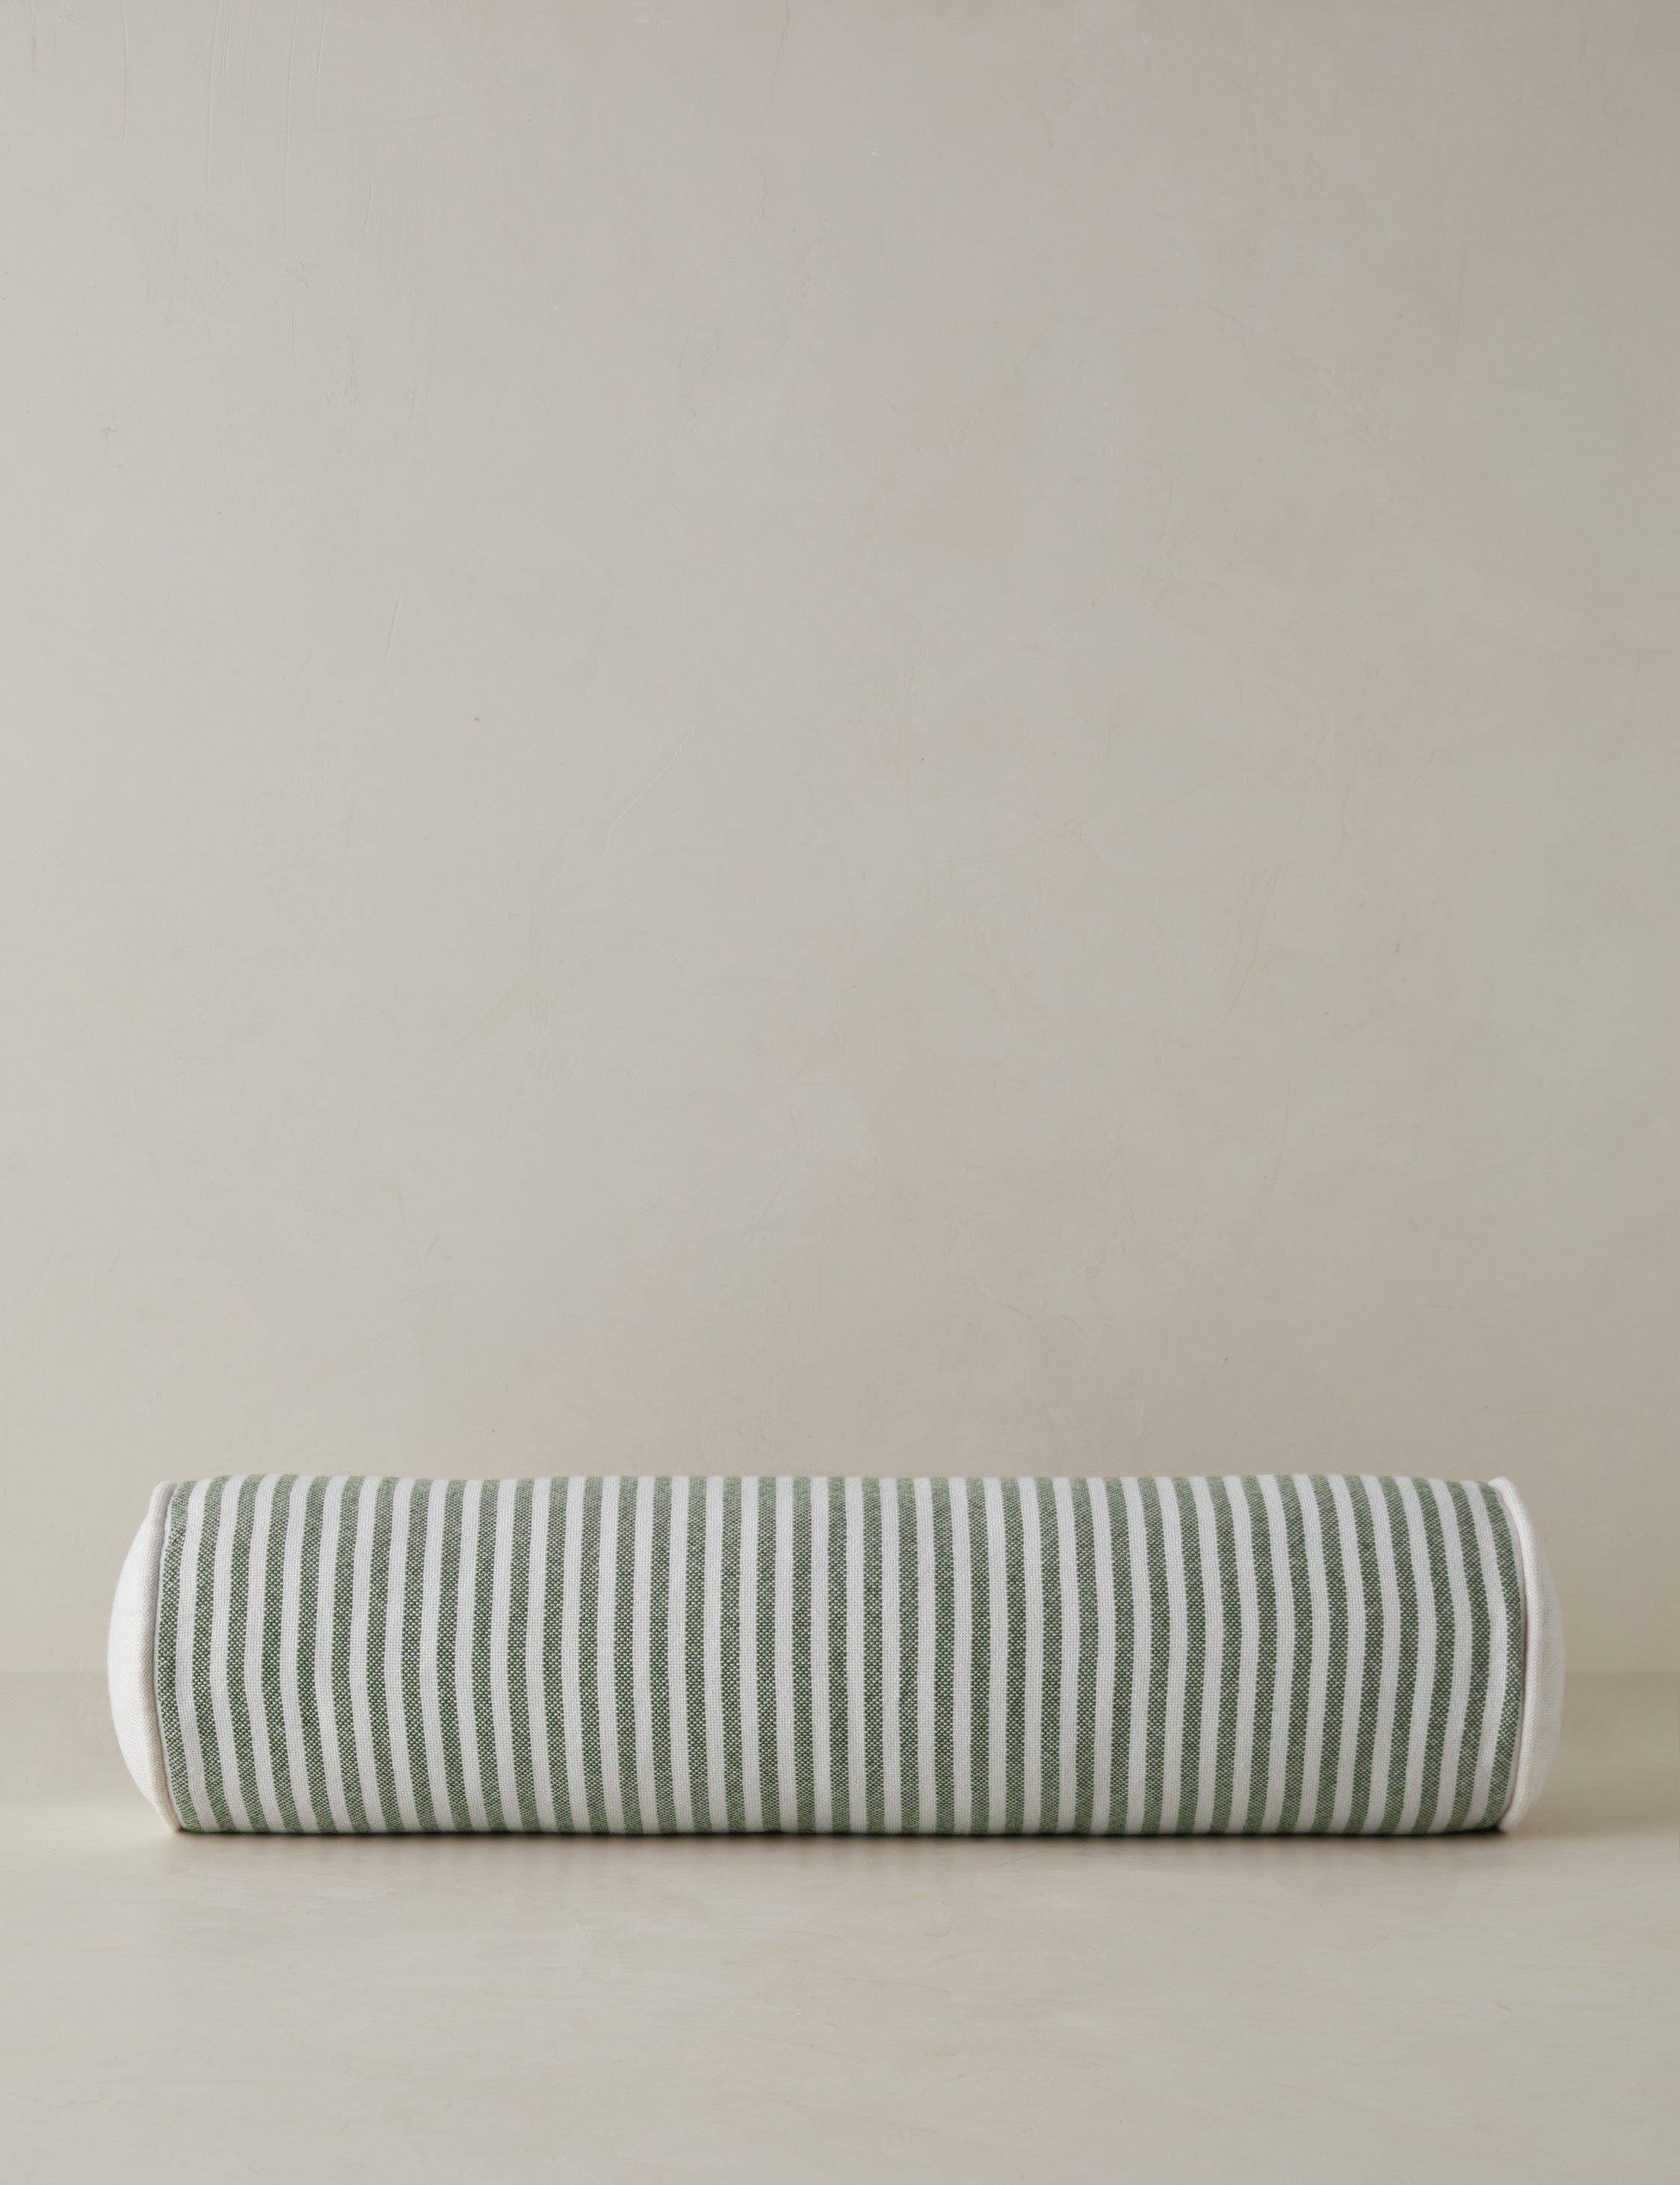 Littu Indoor / Outdoor Striped Bolster Pillow by Sarah Sherman Samuel - Image 0